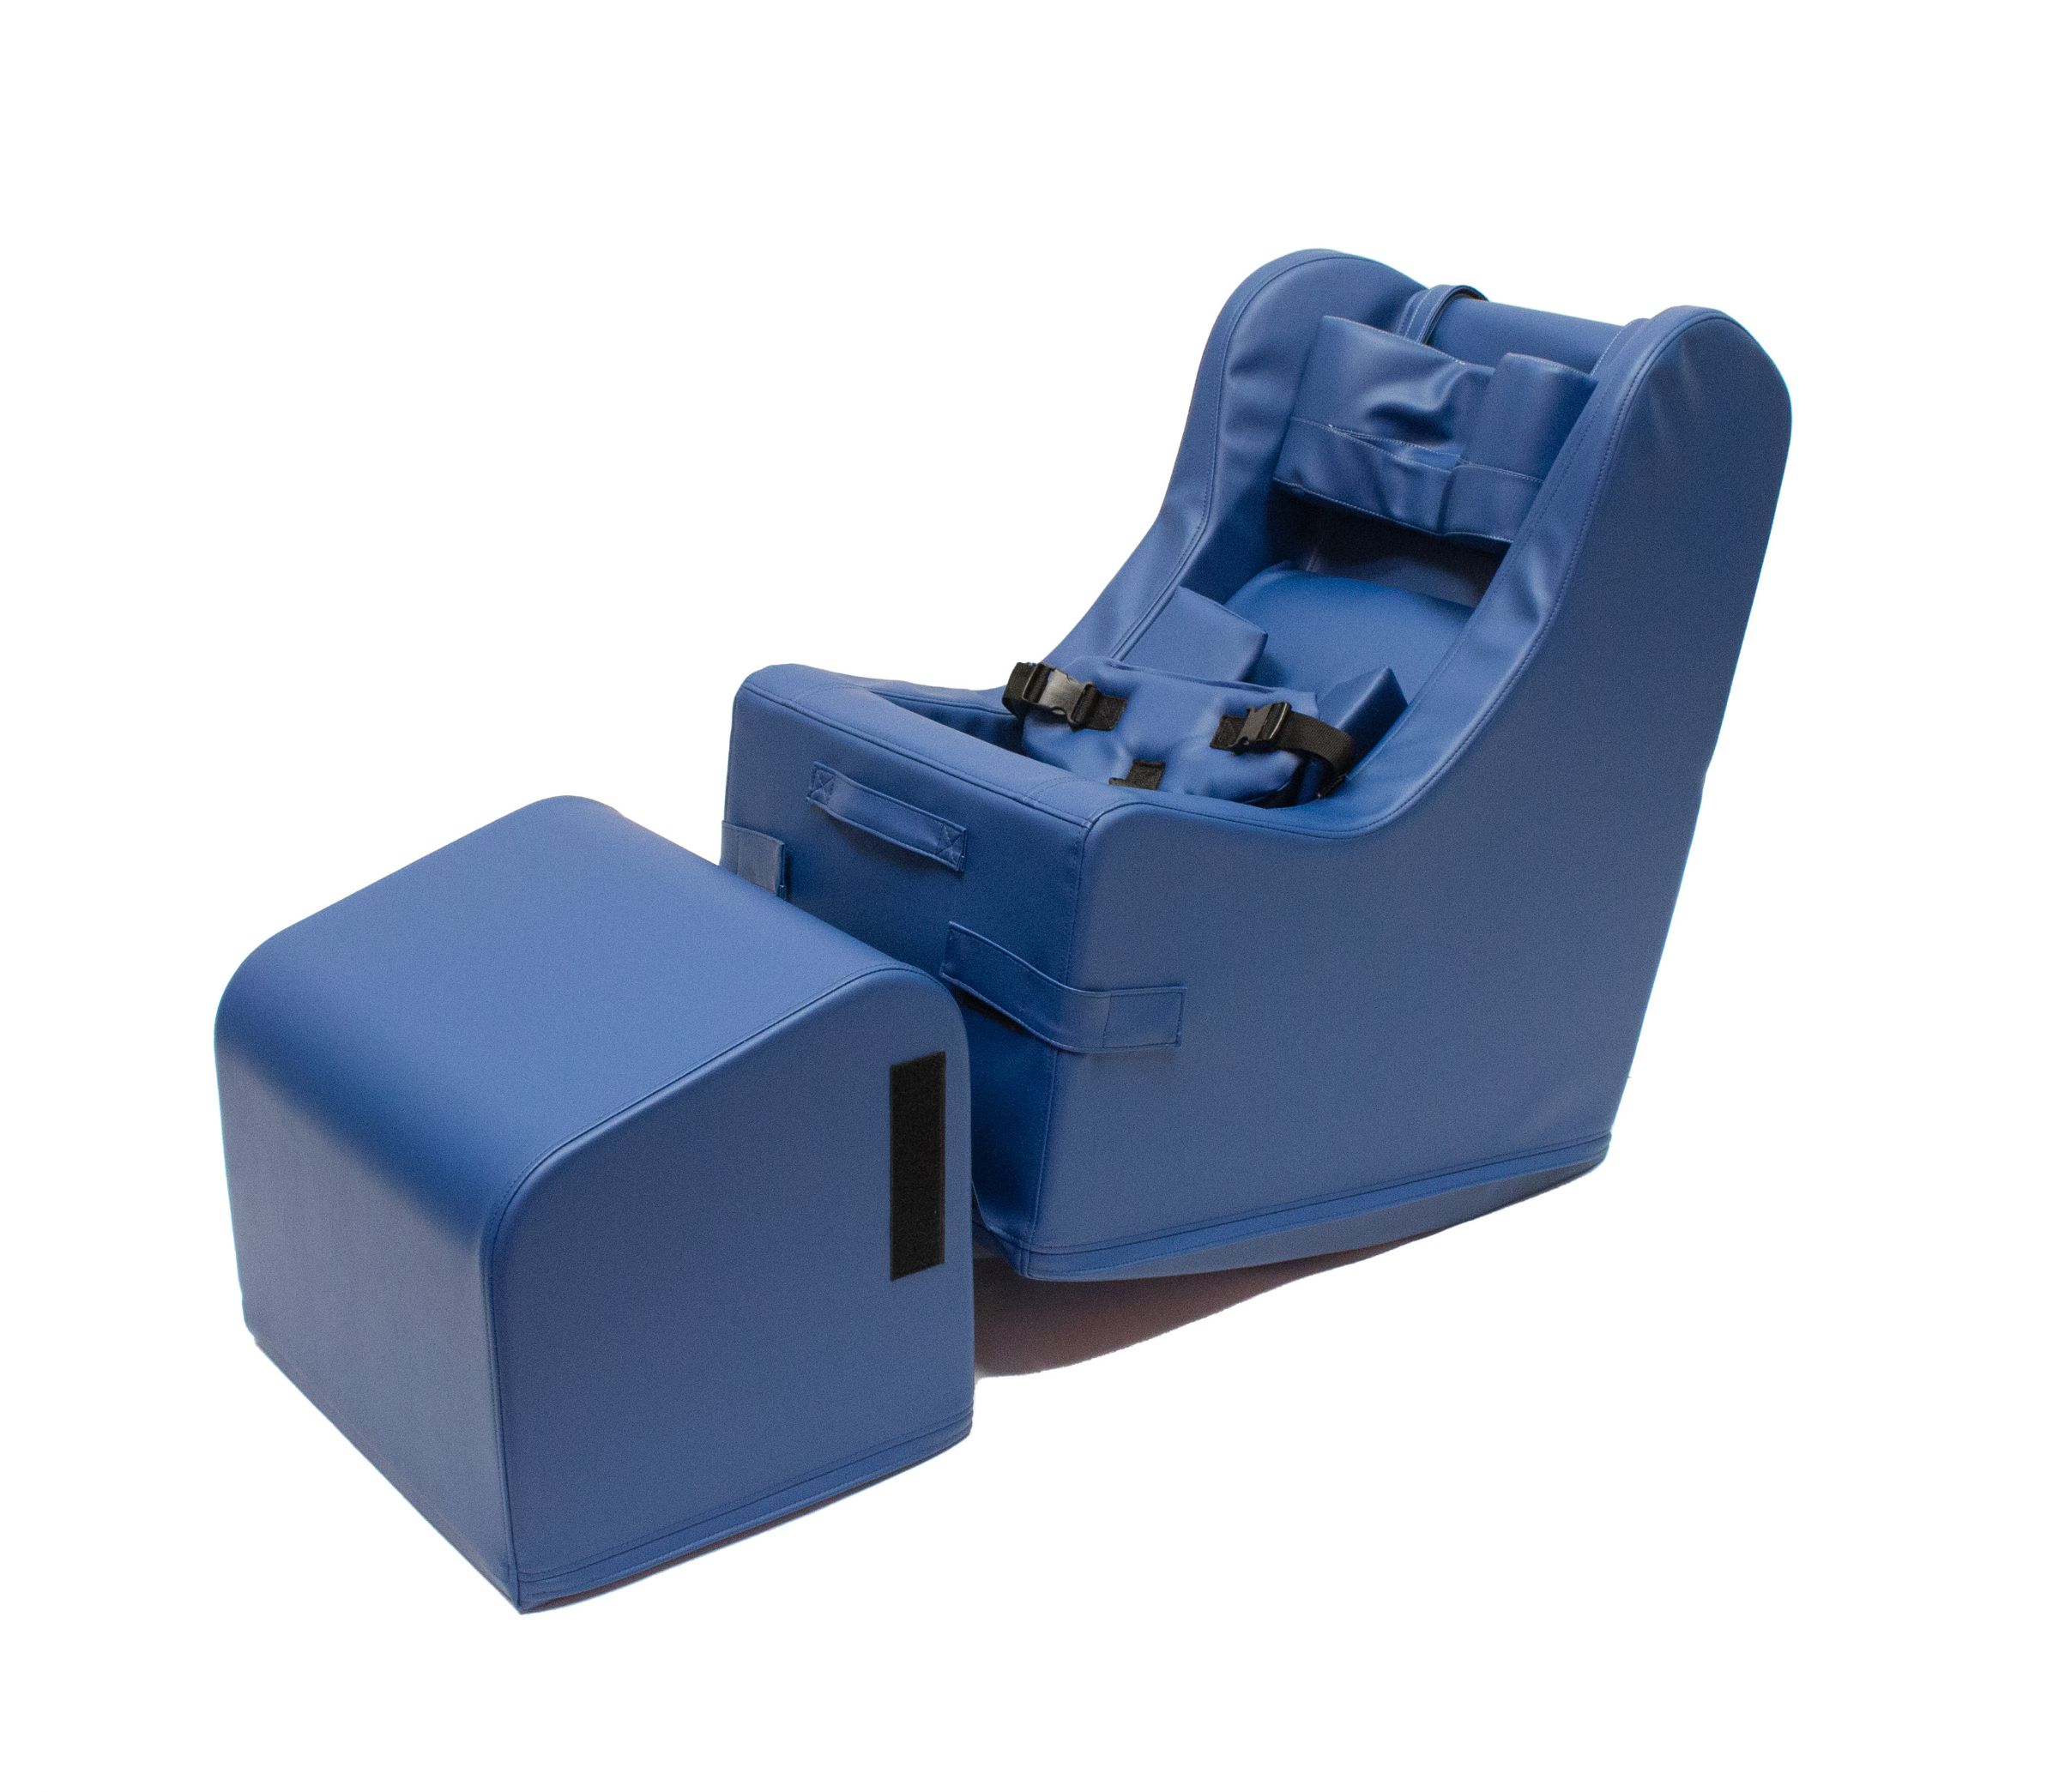 Portable Sensory Seat Cushion - Green